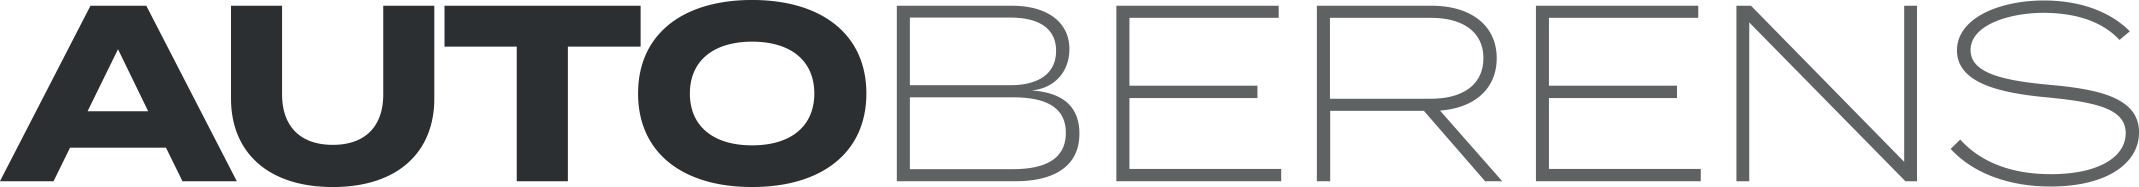 Auto Berens logo